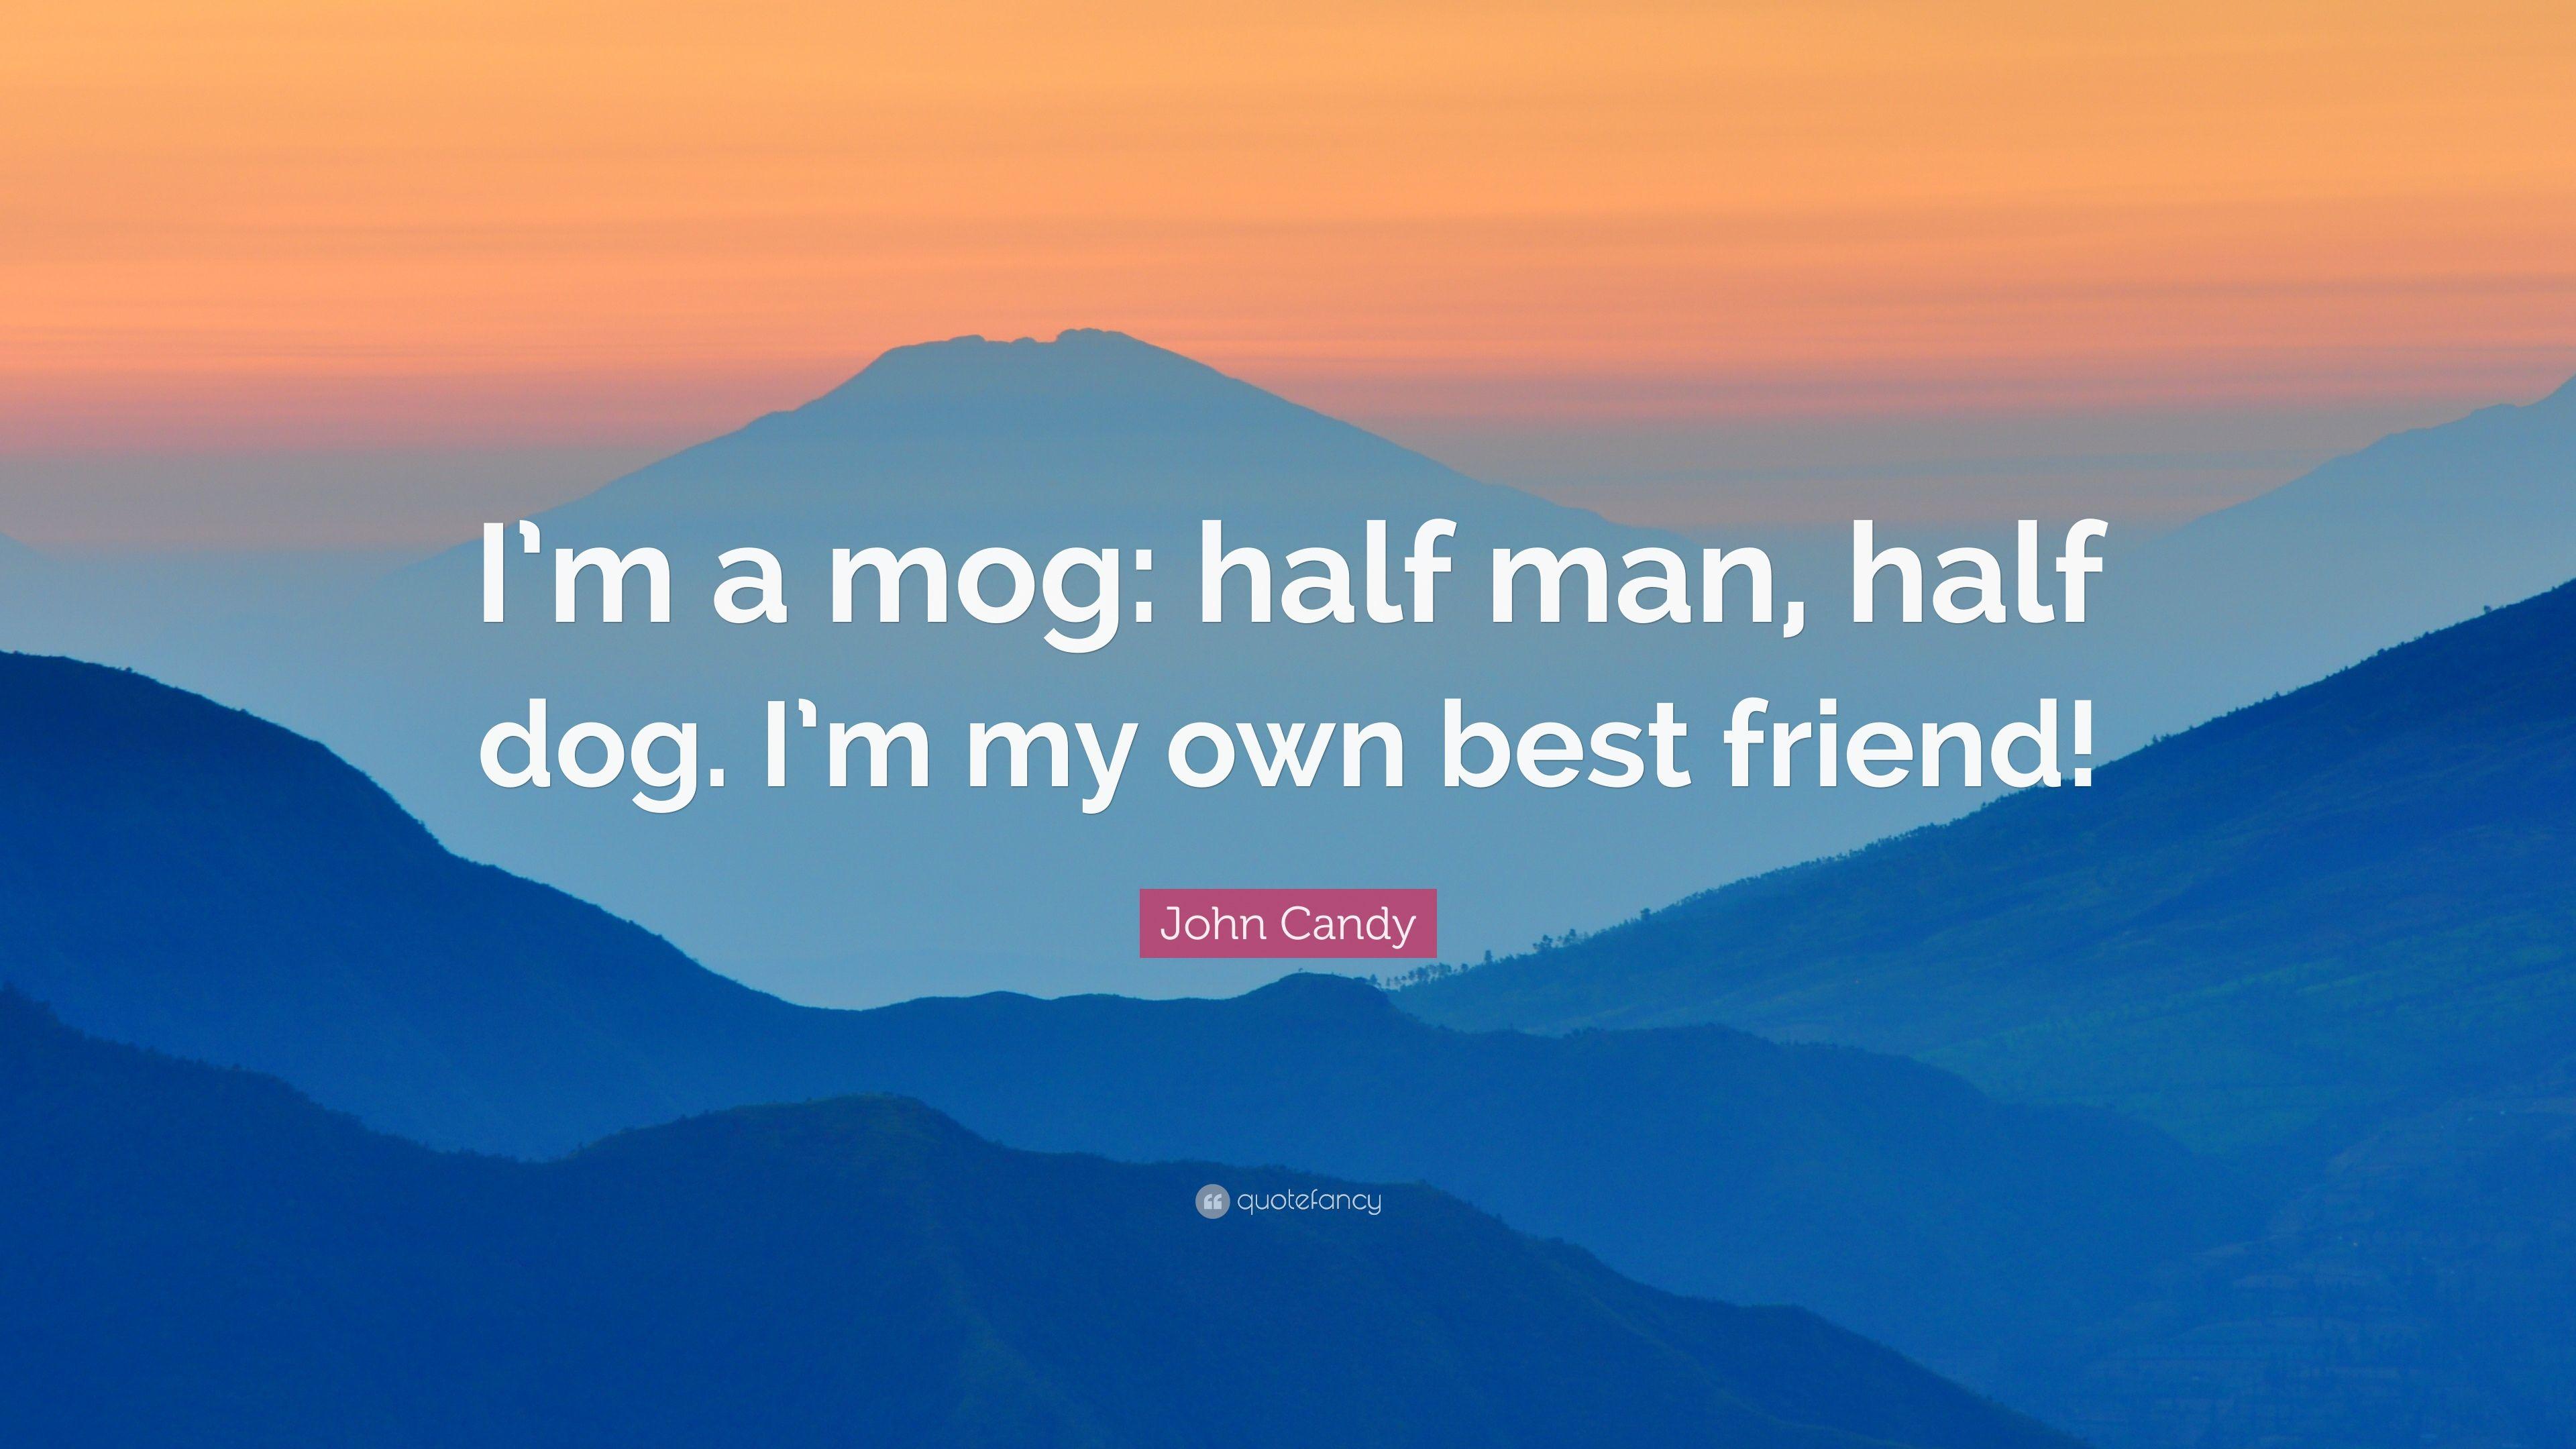 John Candy Quote: “I'm a mog: half man, half dog. I'm my own best